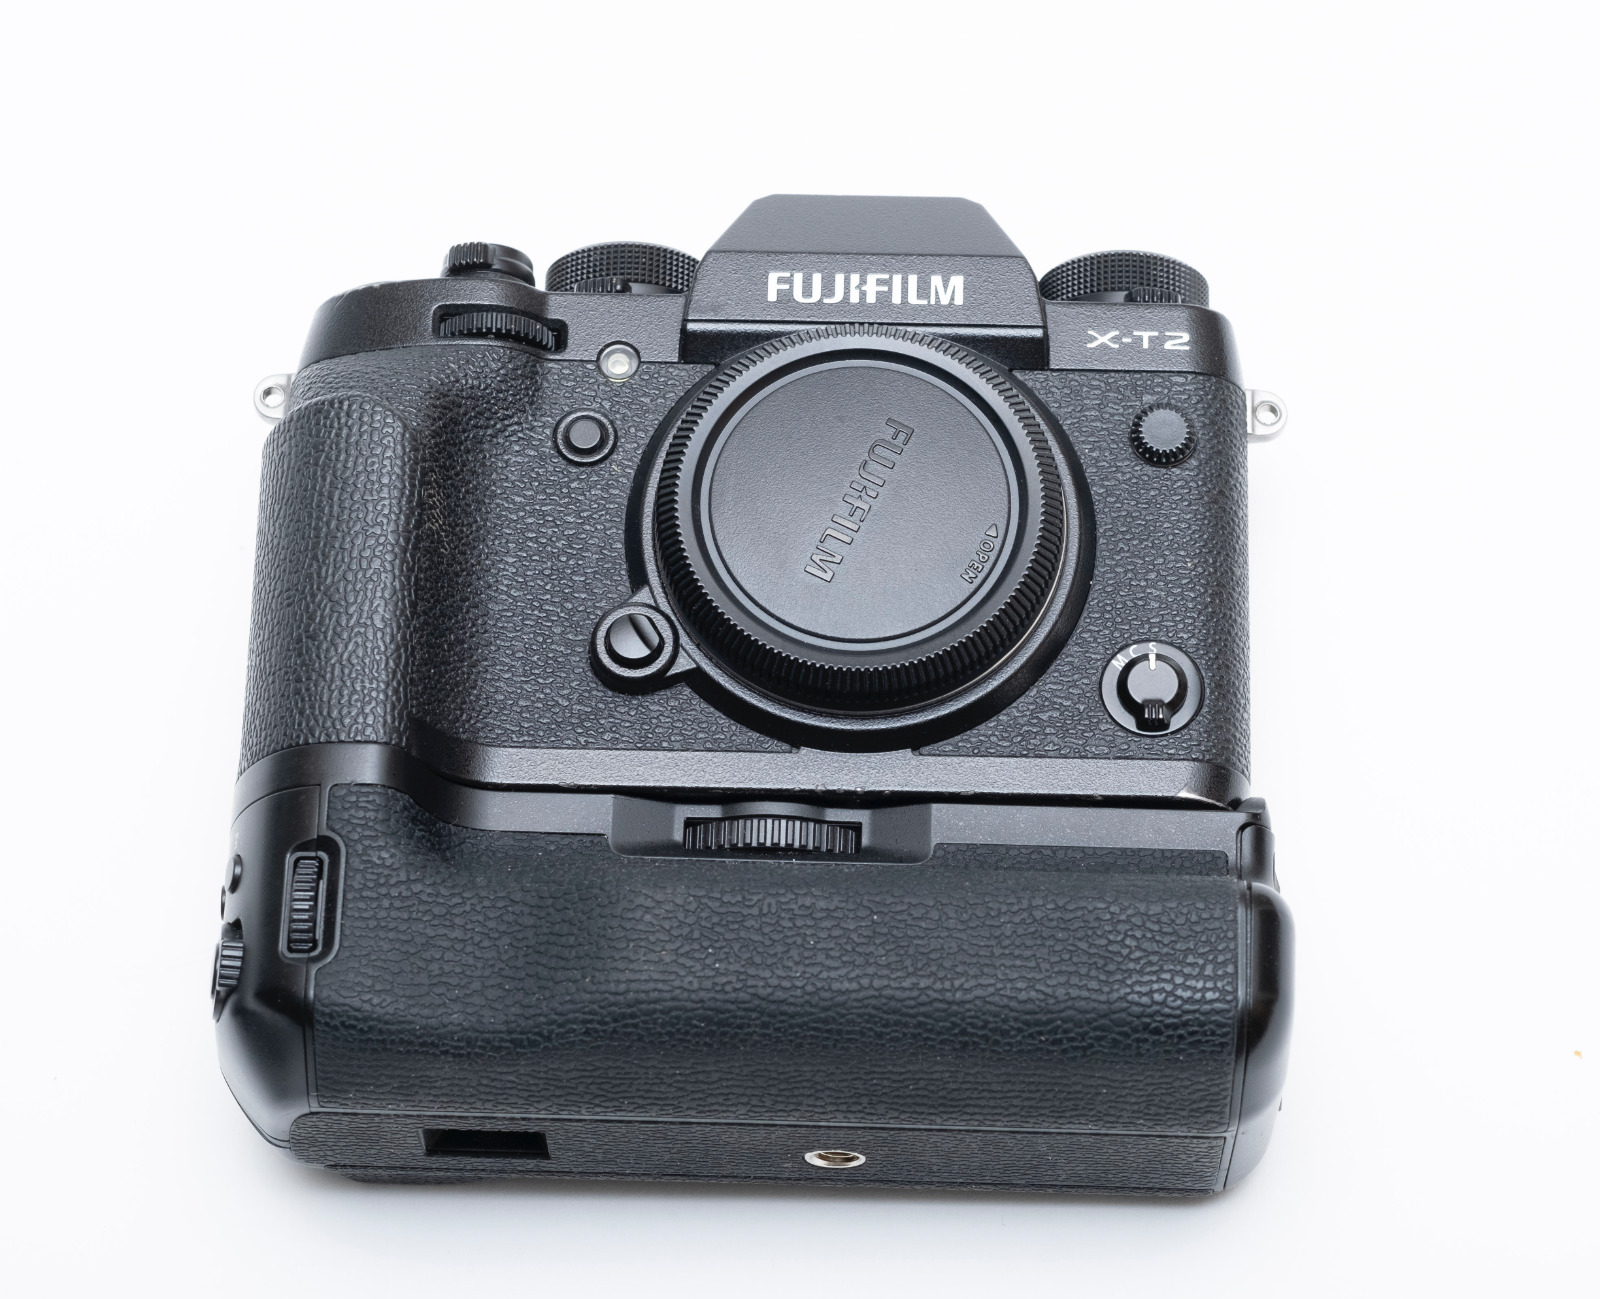 Fujifilm X series X-T2 24.0MP Digital SLR Camera - Black (Body Only)